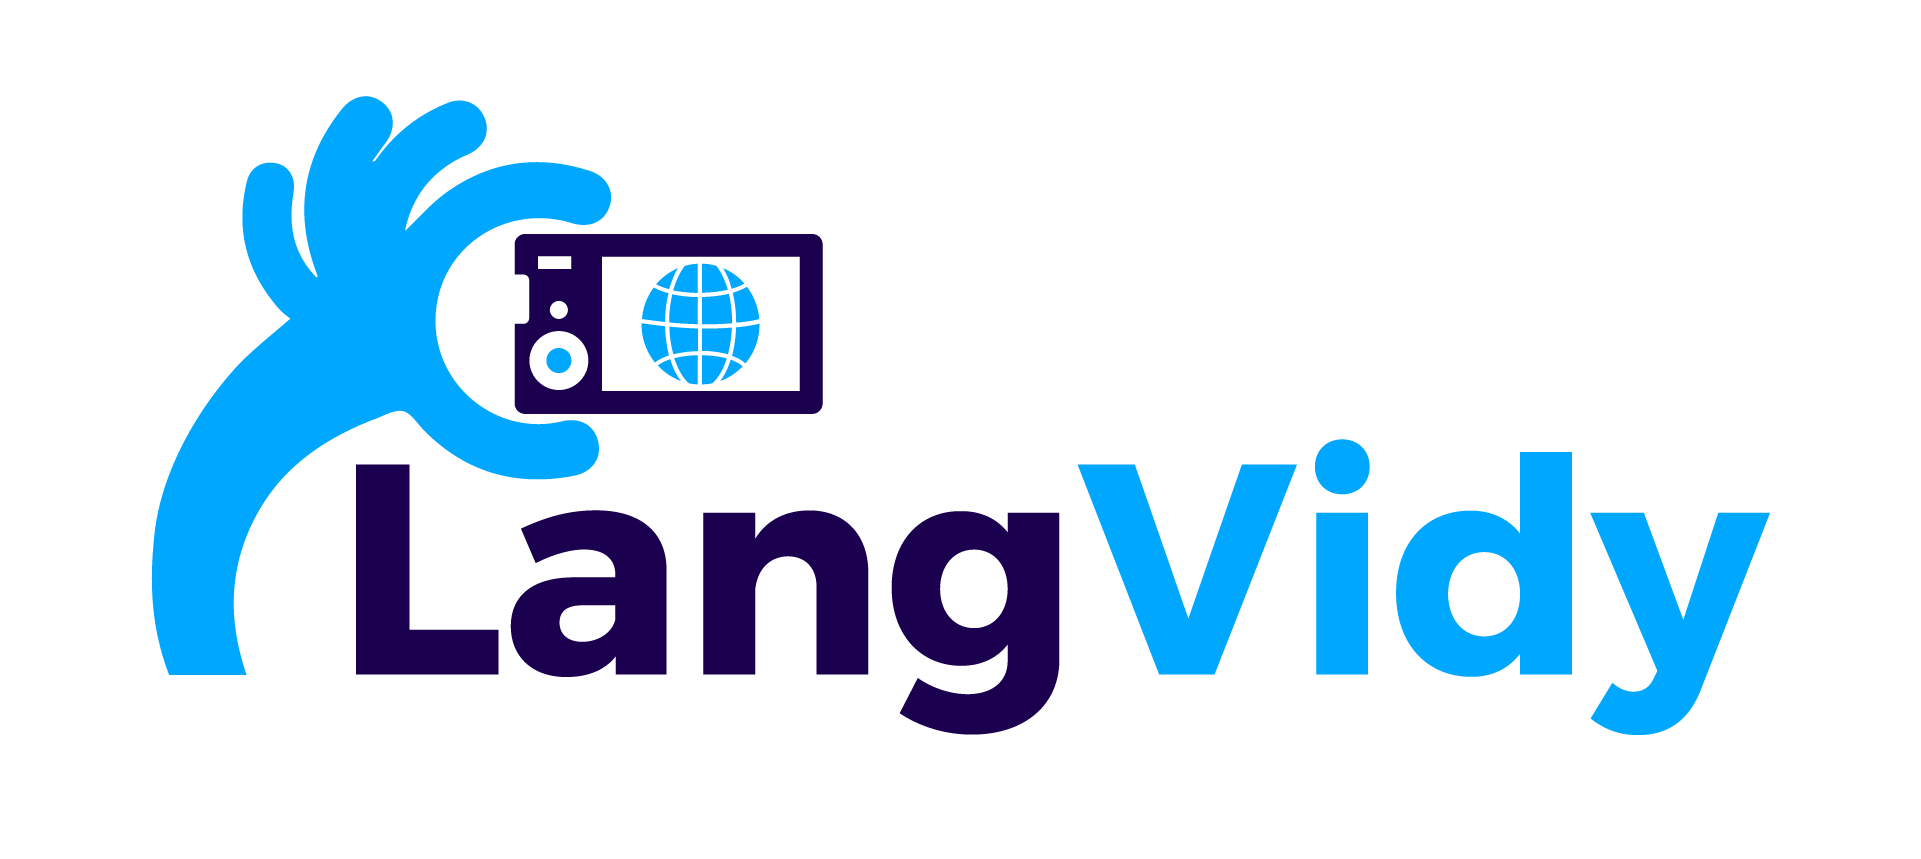 "LangVidy Video Editing Agency Logo."